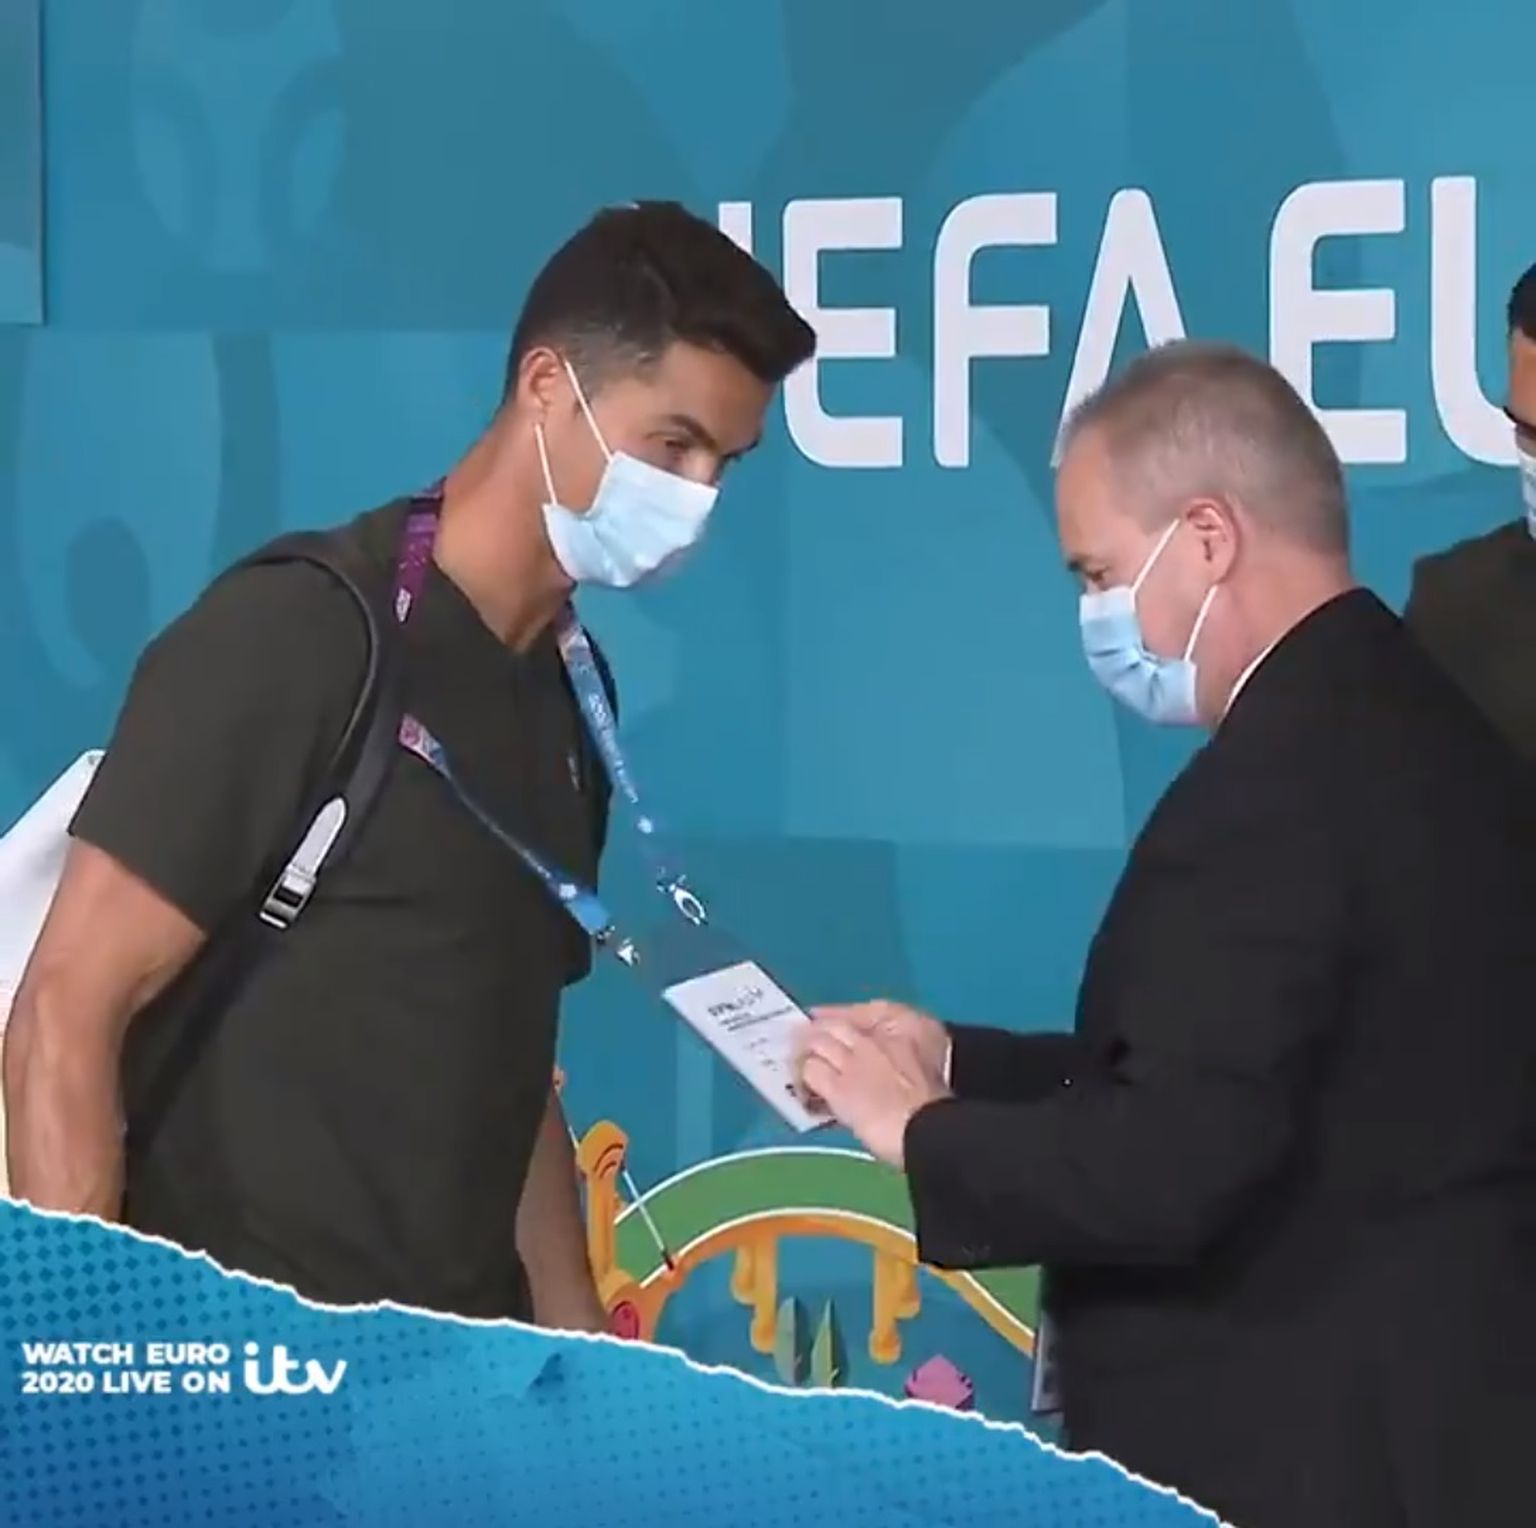 Ungari turvamees kontrollis Cristiano Ronaldo kaelakaarti.